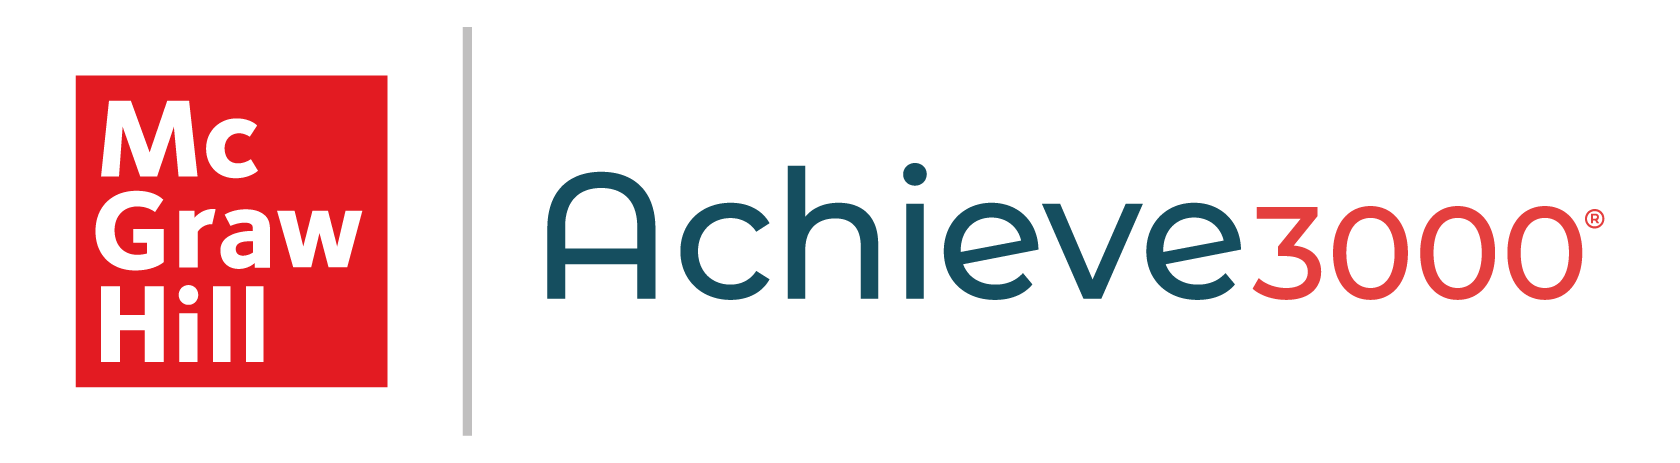 MH_Achieve3000_Logo